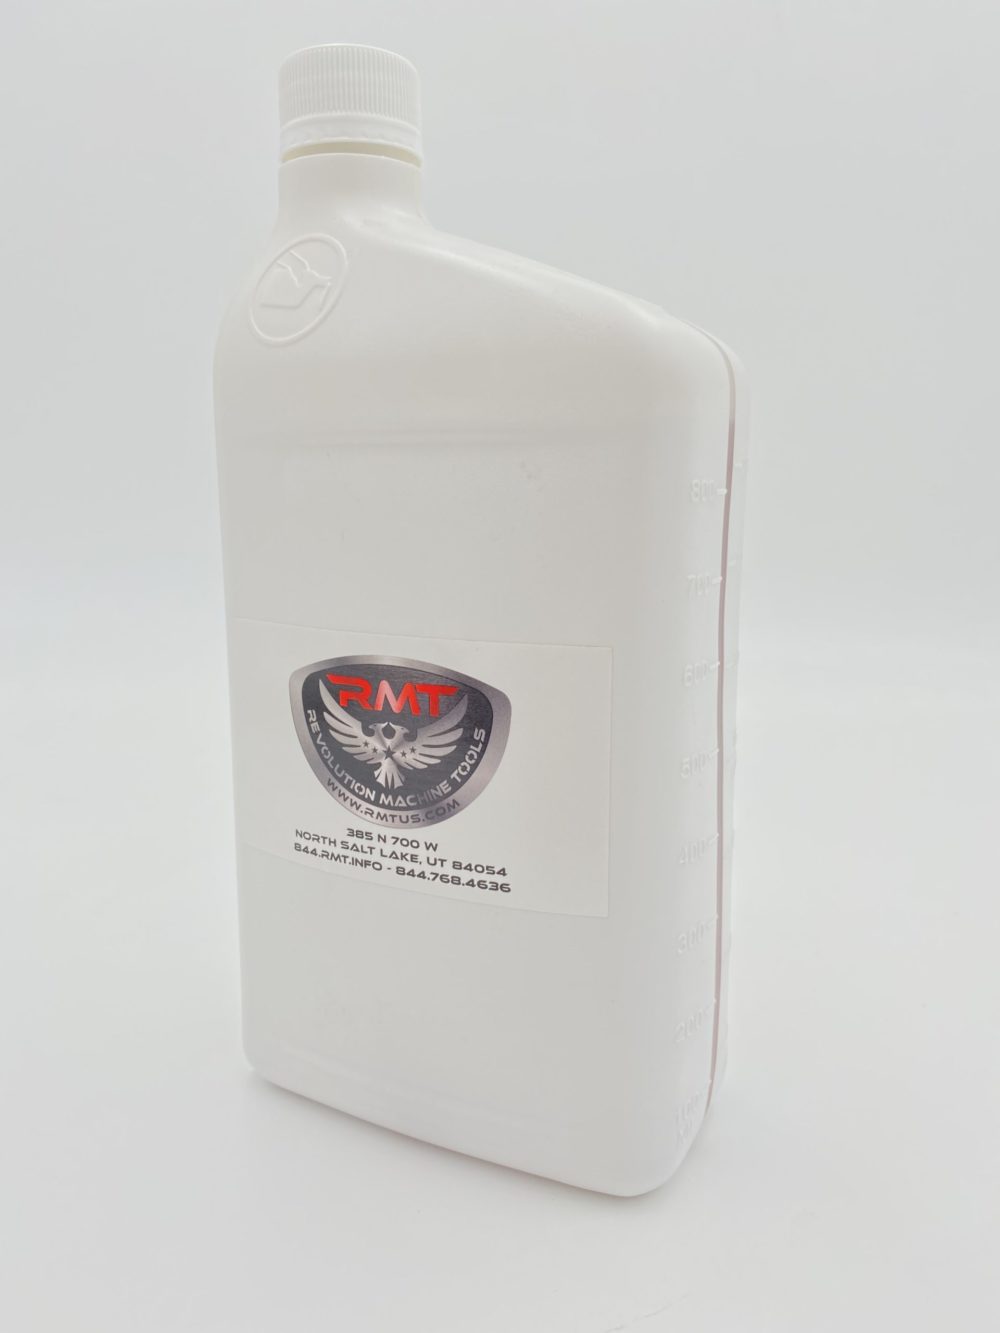 RMT-Dropsa MK Stainless Oil (1 QT) - Z3225465